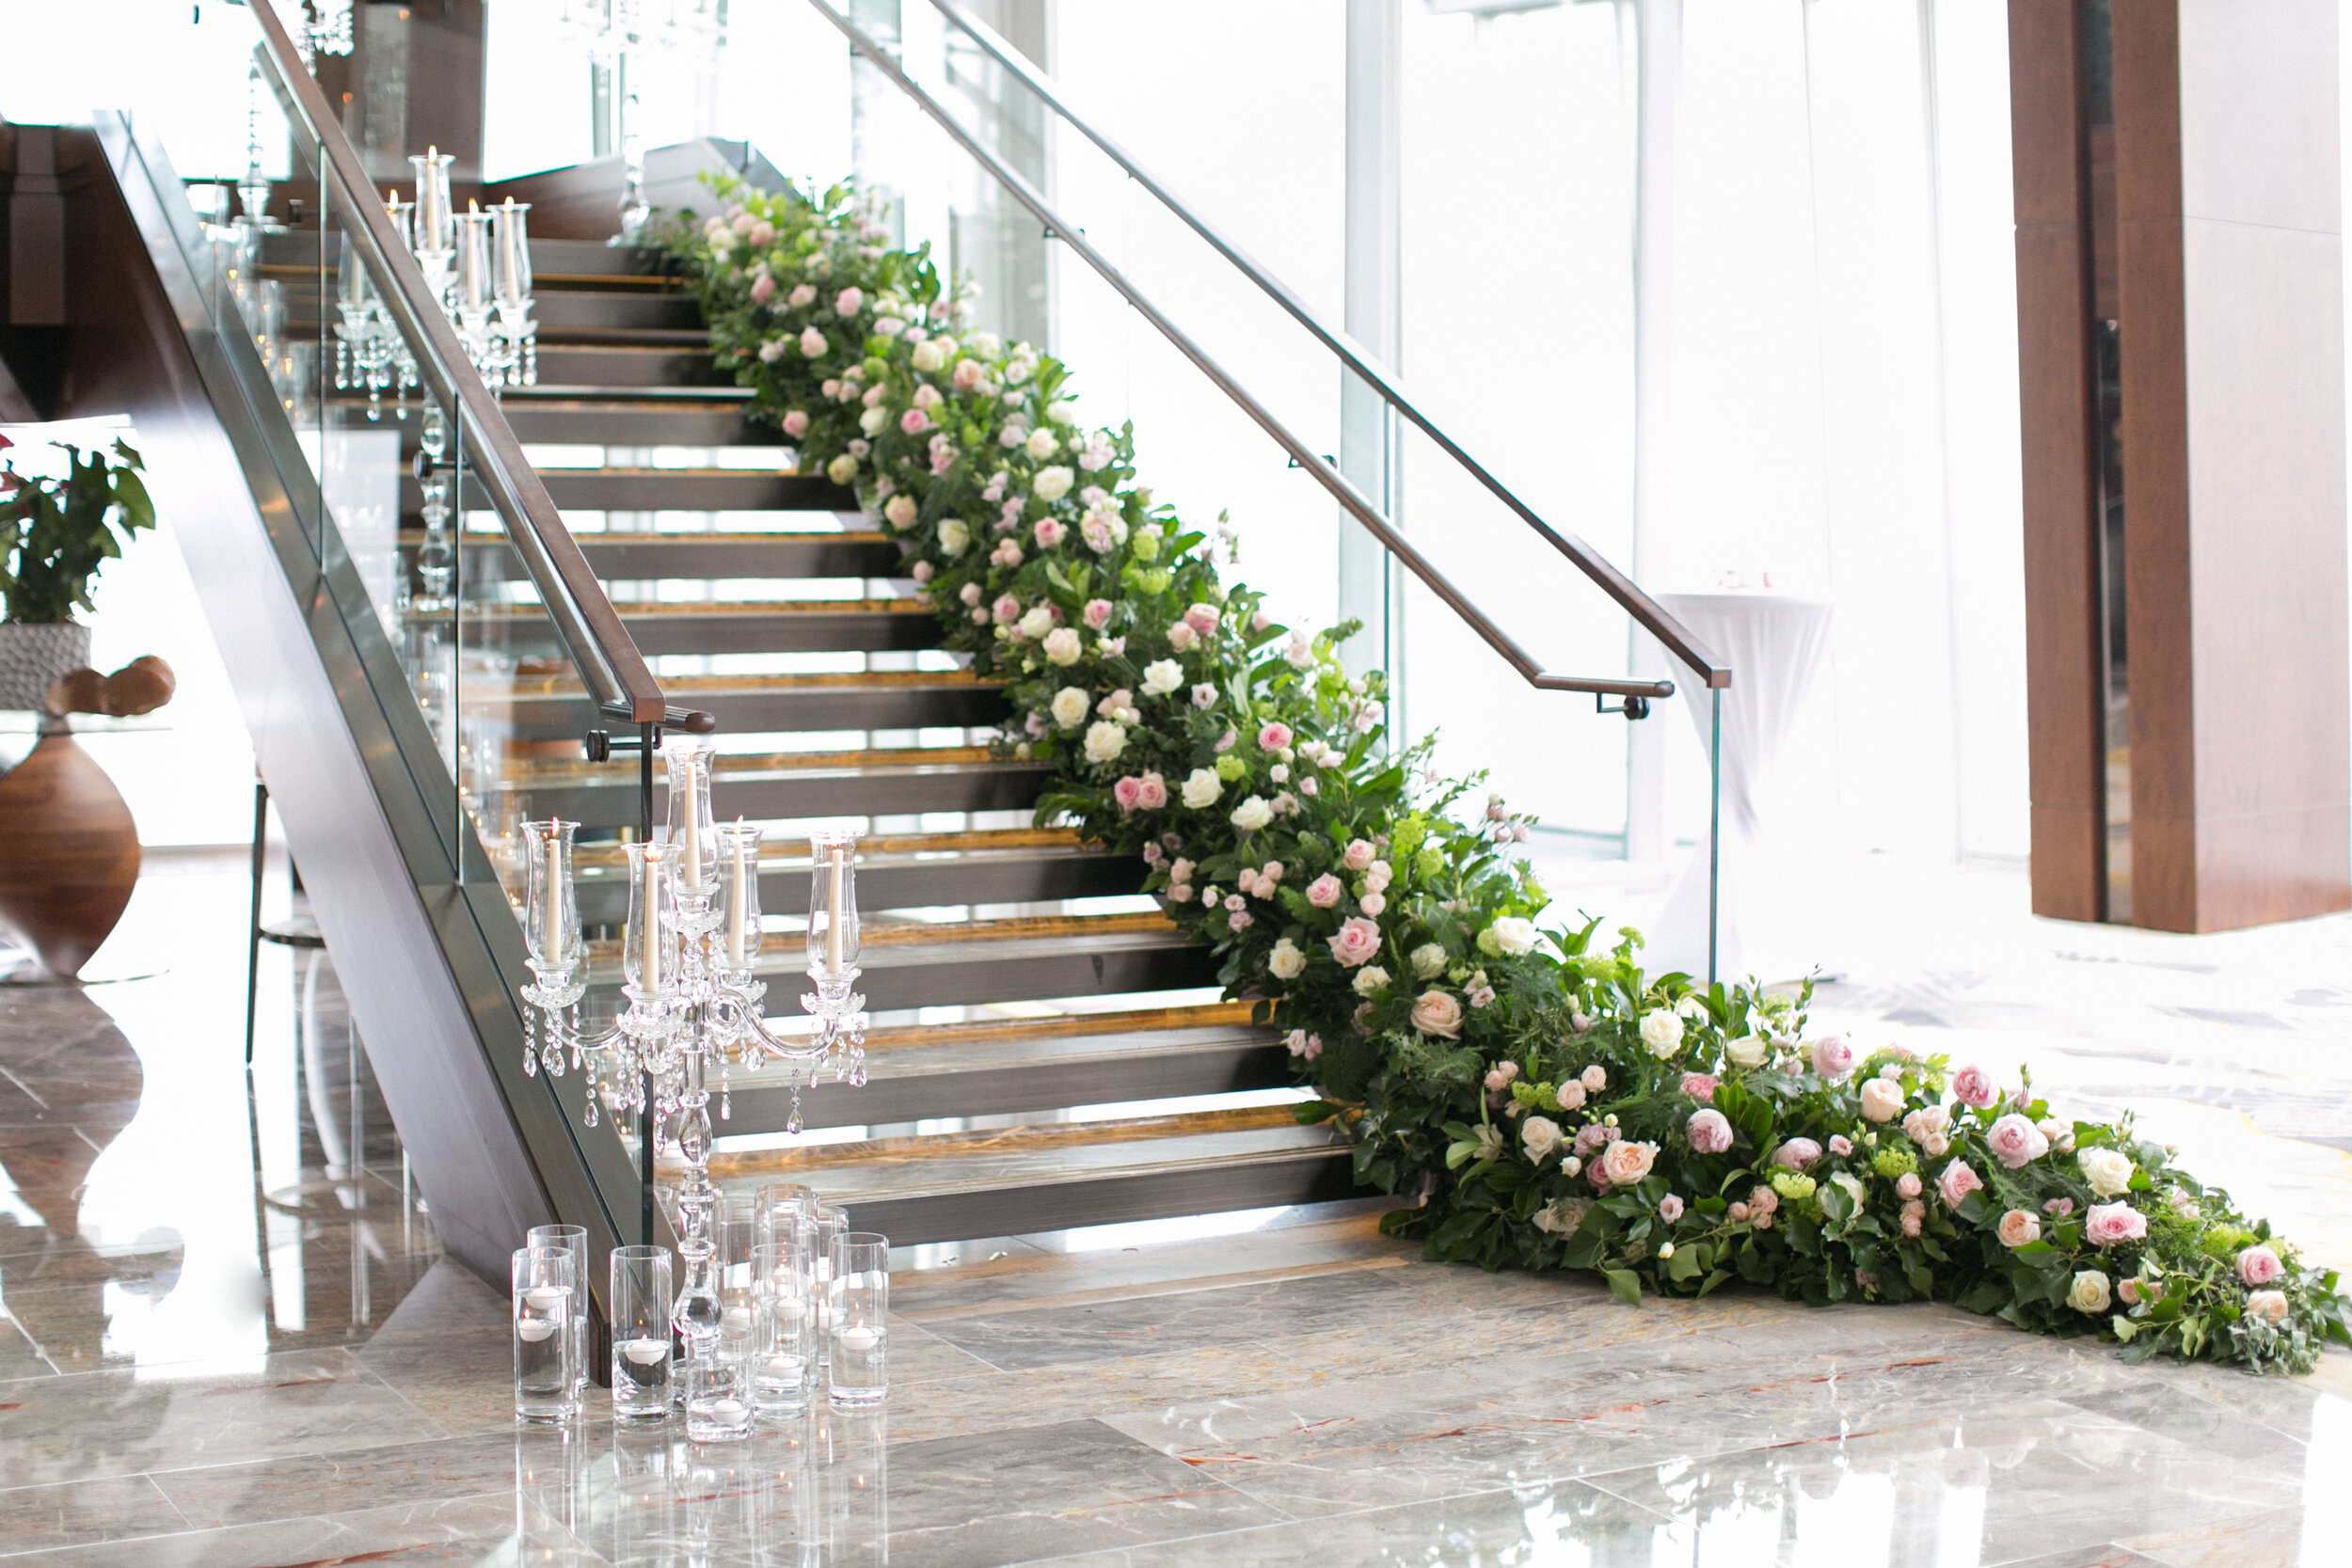 Shangri-La-London-miriam-faith-flowers-wedding-staircase-45.jpg